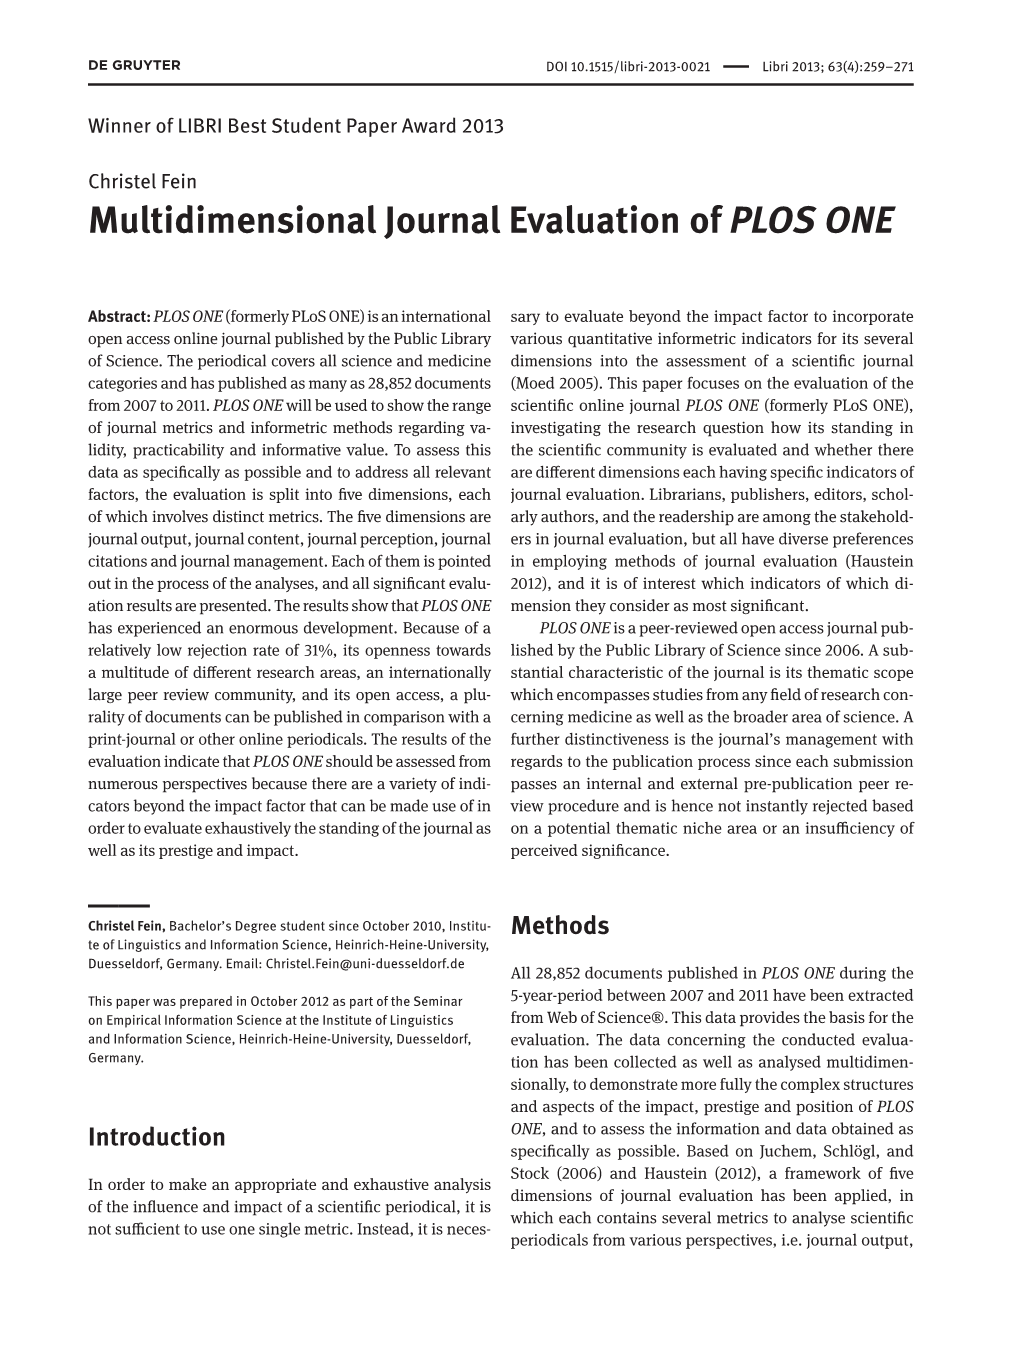 Multidimensional Journal Evaluation of PLOS ONE